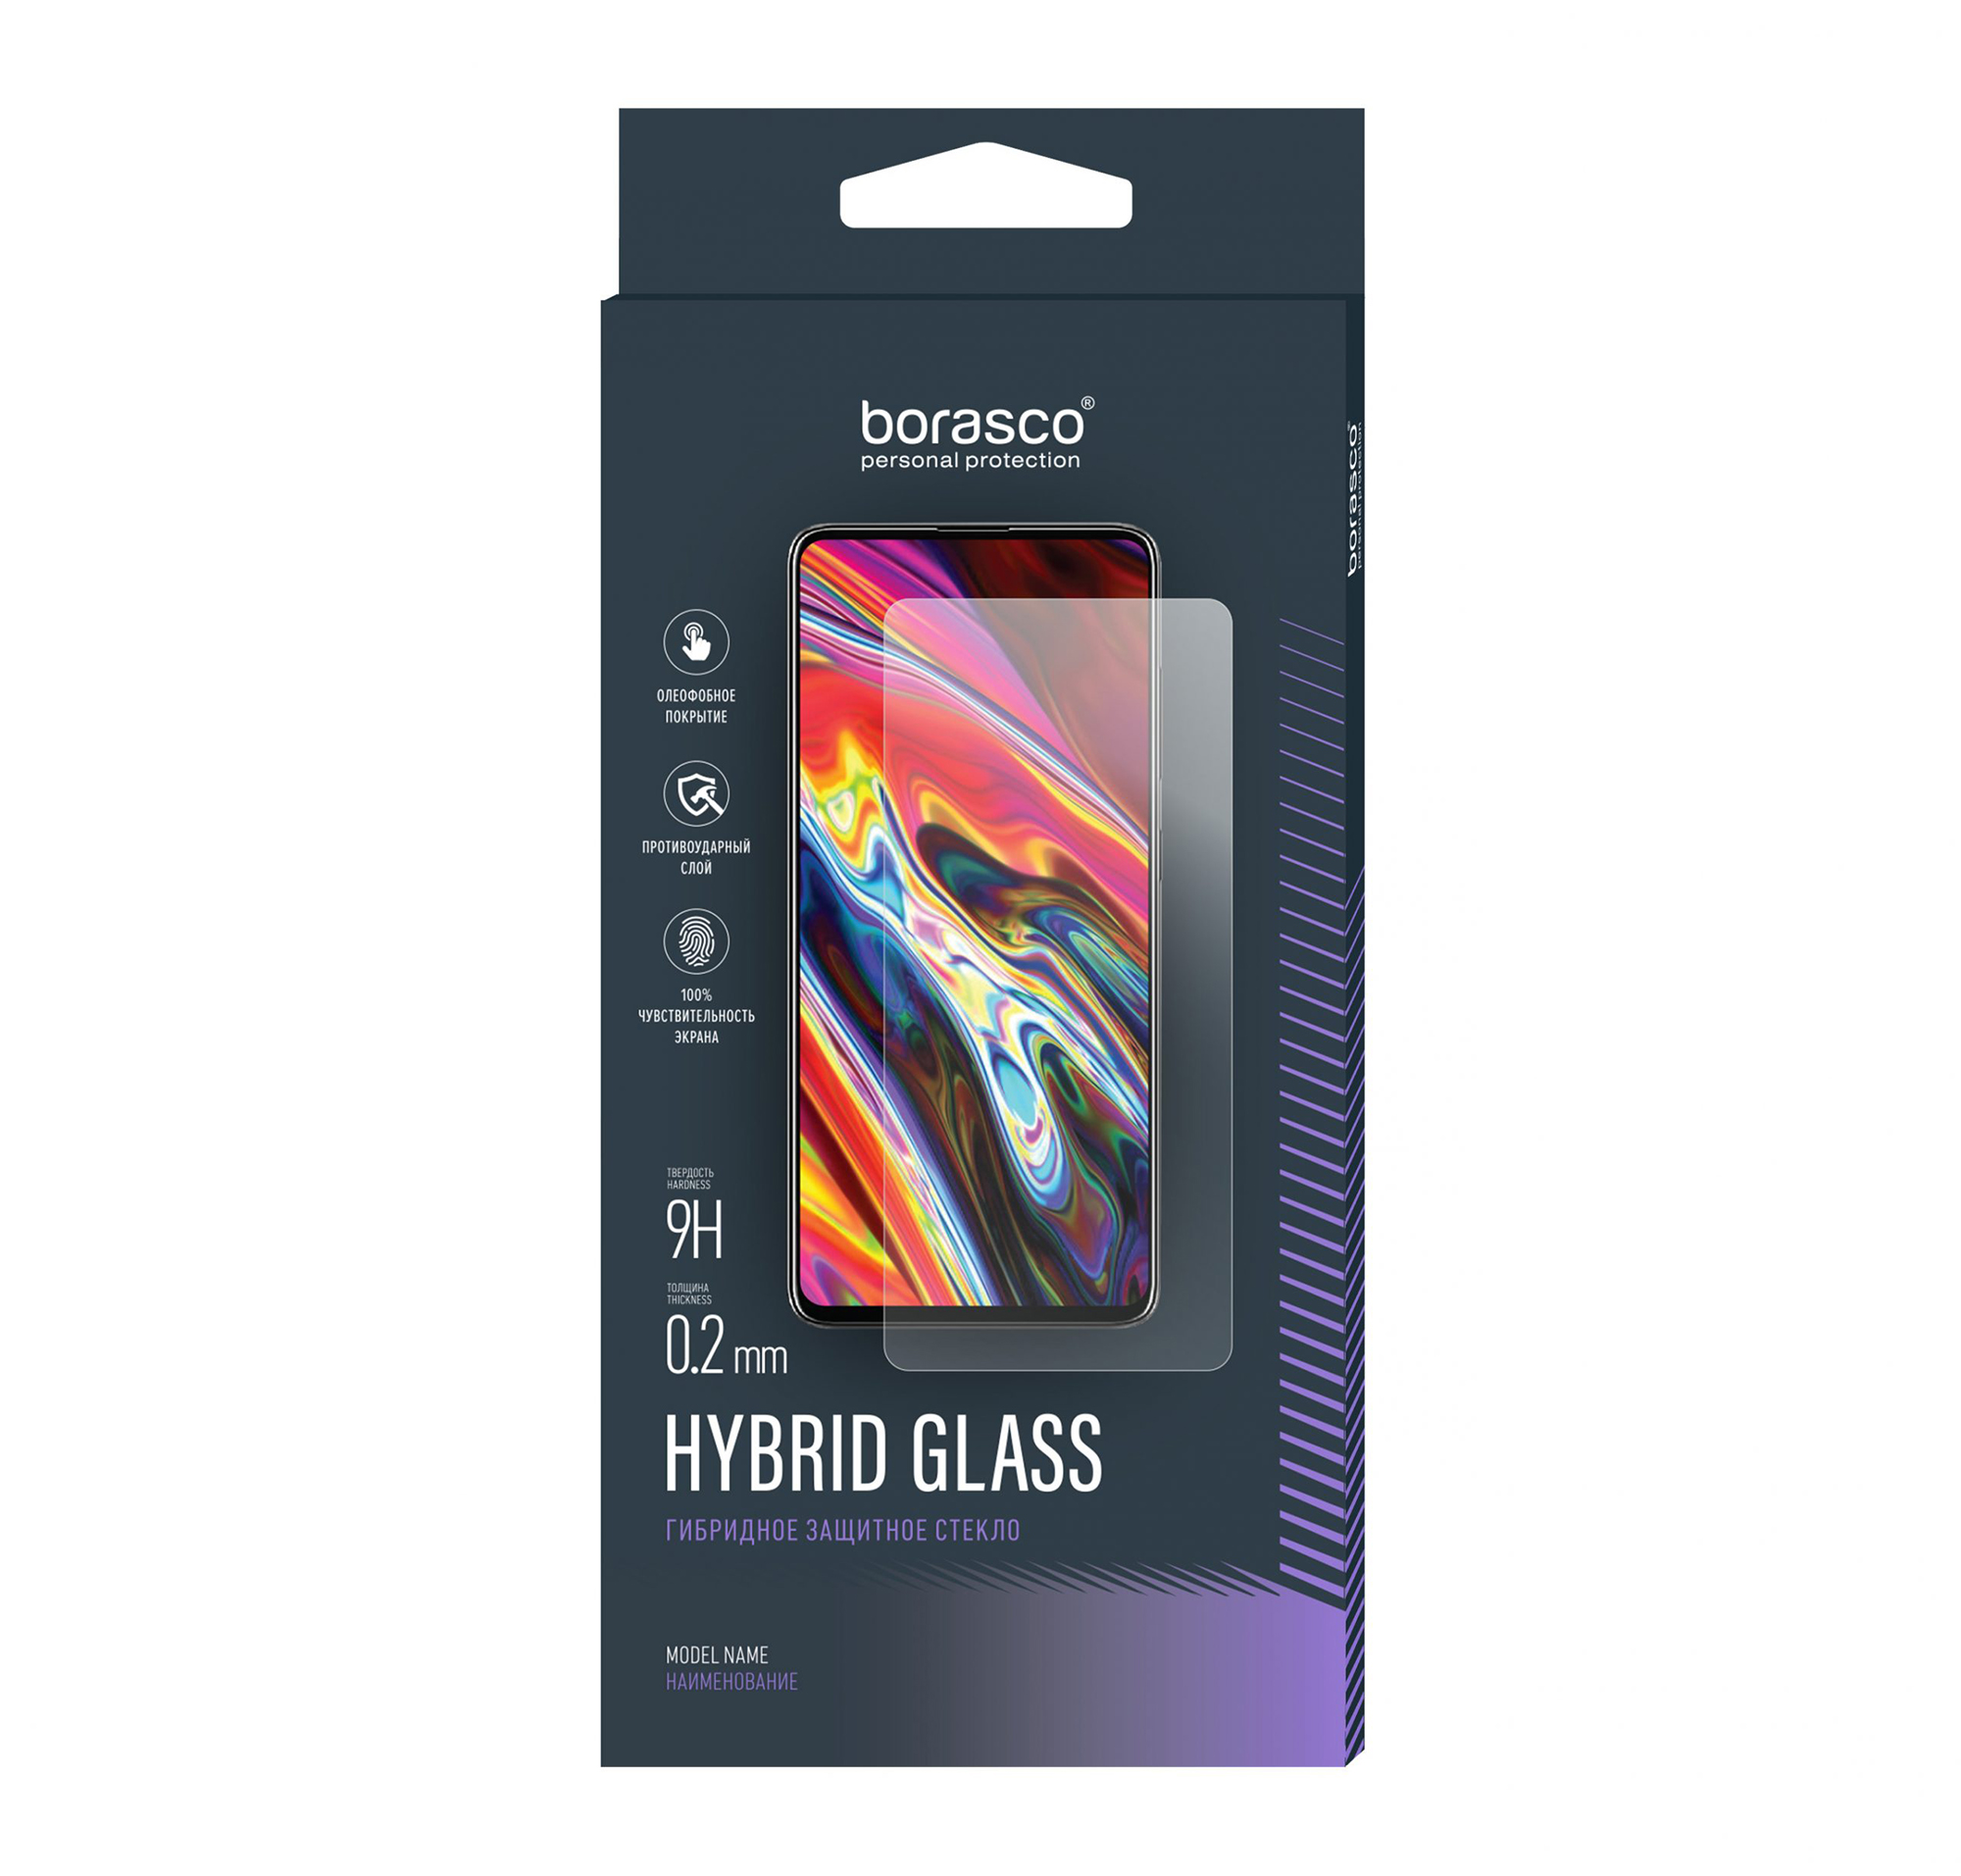 Защитное стекло Hybrid Glass для Asus ZenFone 2 (ZE500KL) чехол mypads fondina coccodrillo для asus zenfone 4 pro zs551kl z01gs